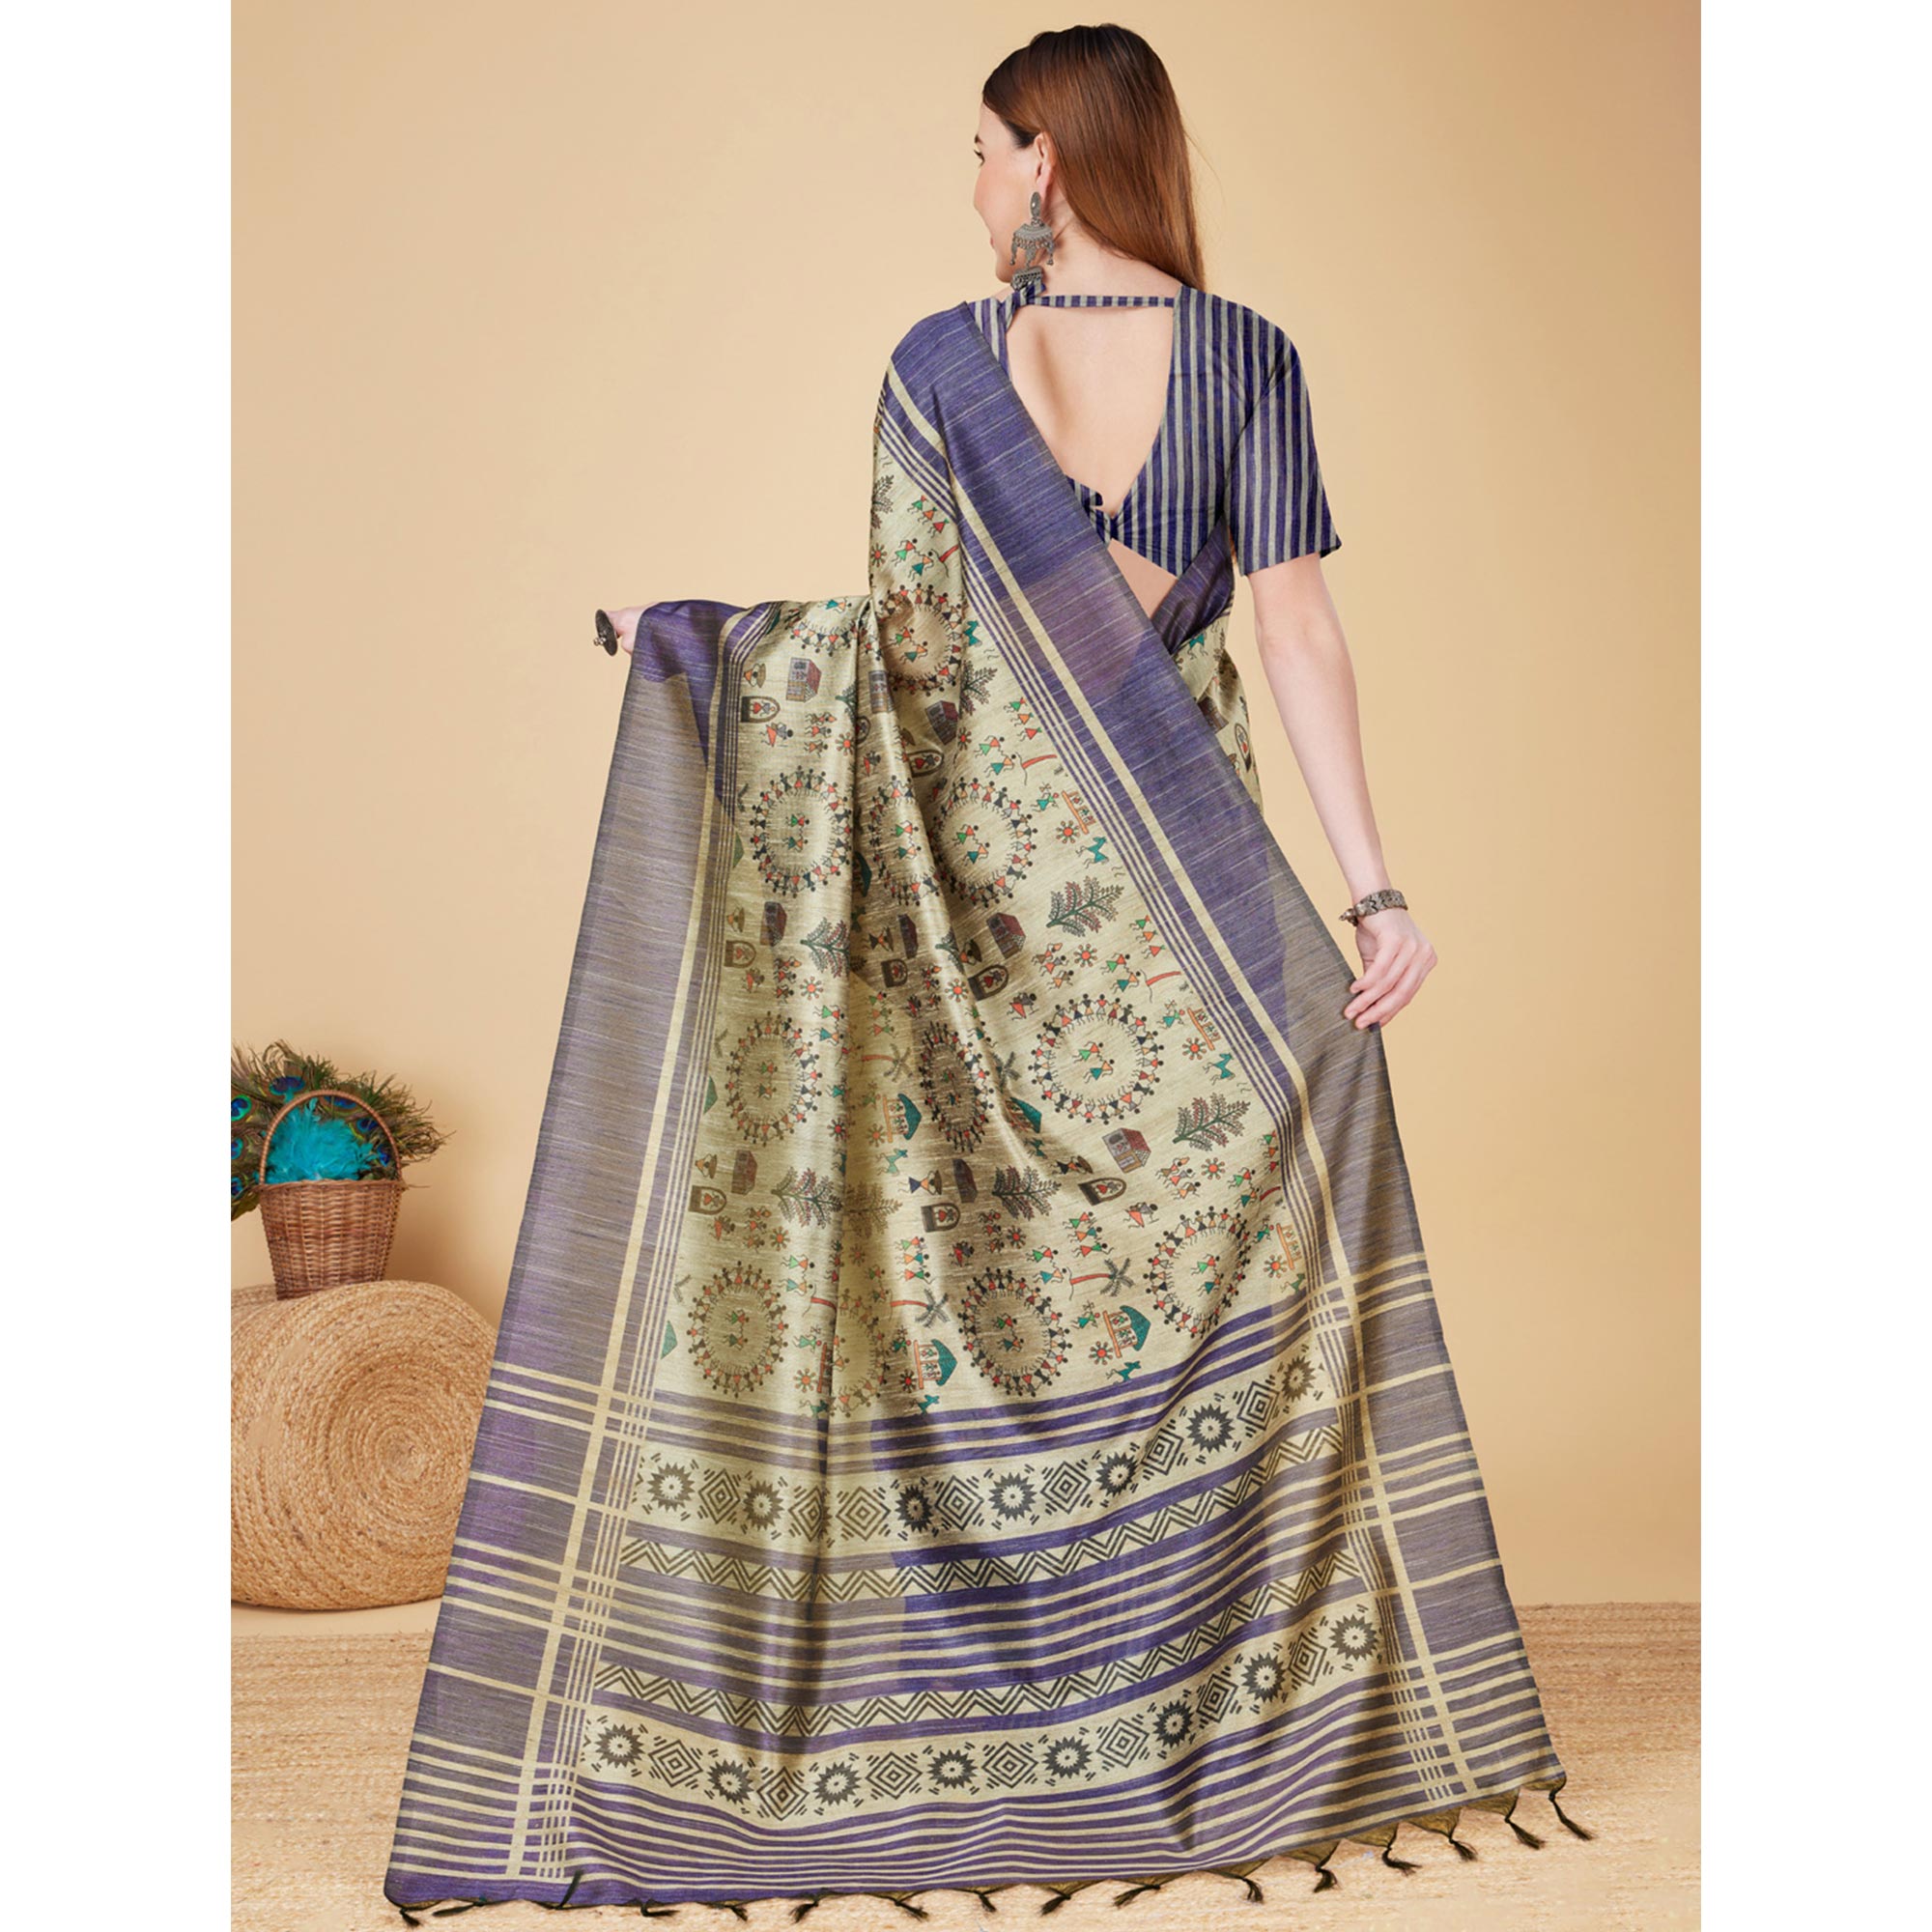 Chikoo & Blue Printed Bhagalpuri Silk Saree With Tassels